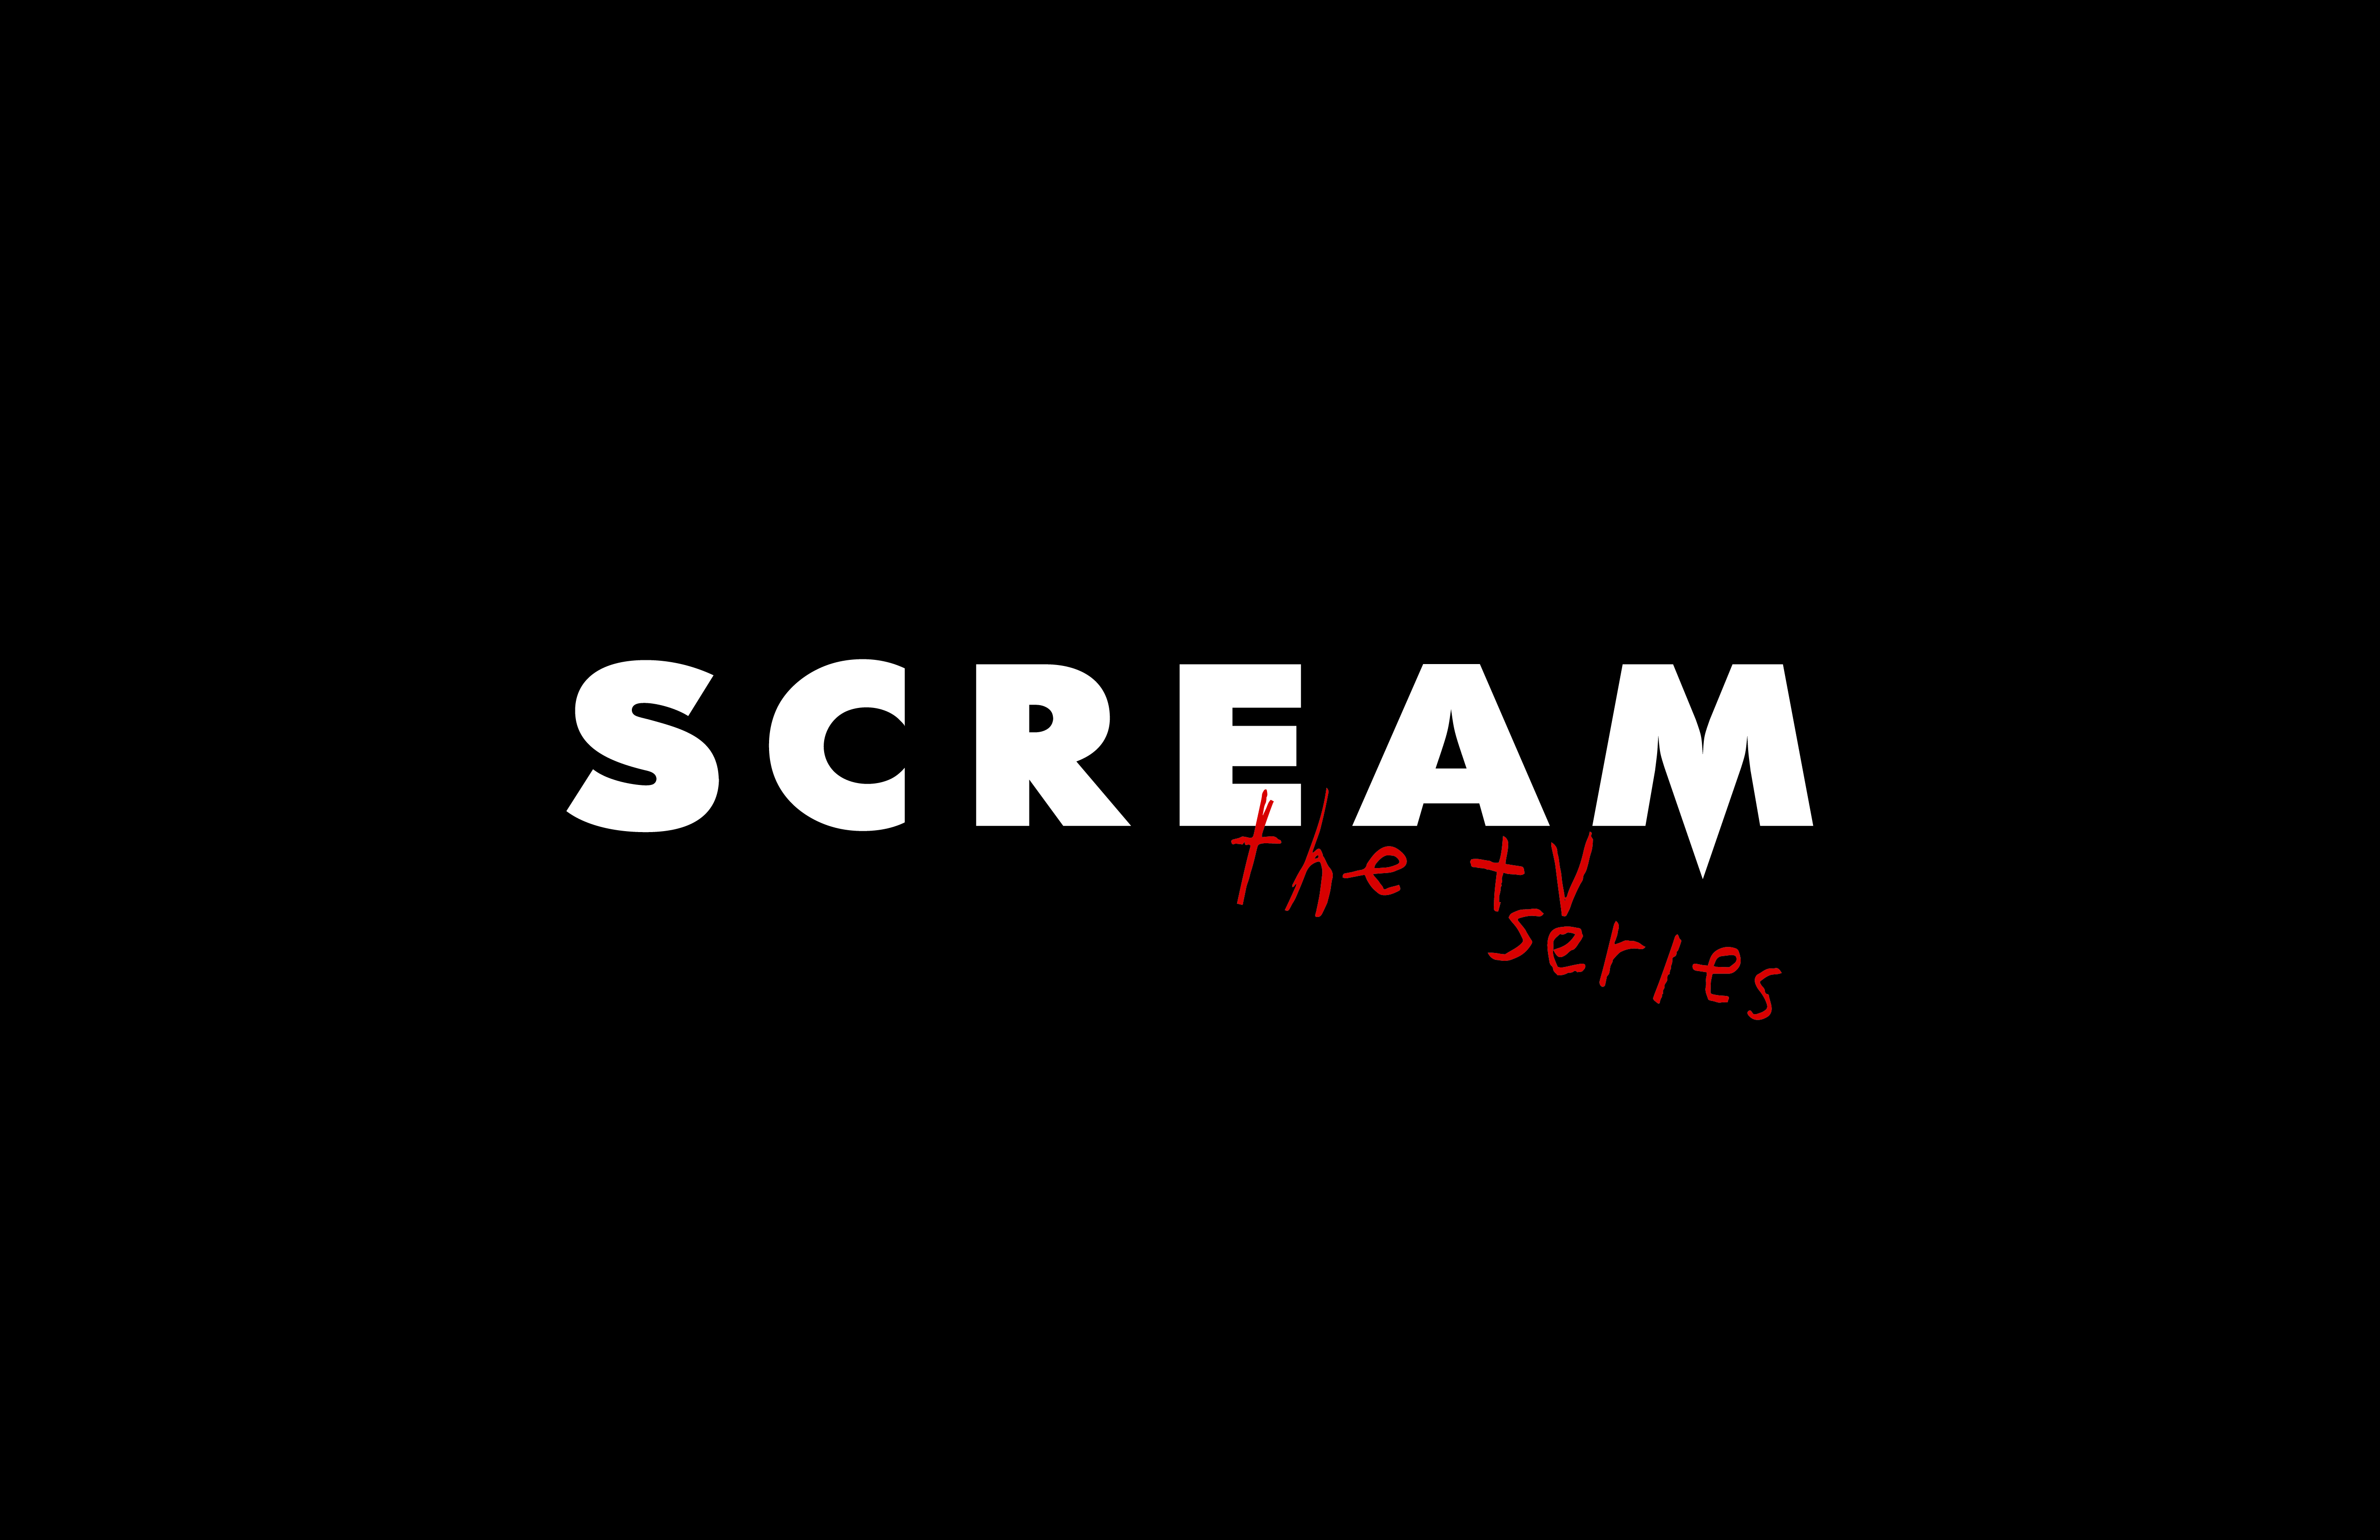 Scream 2.02- “Psycho”